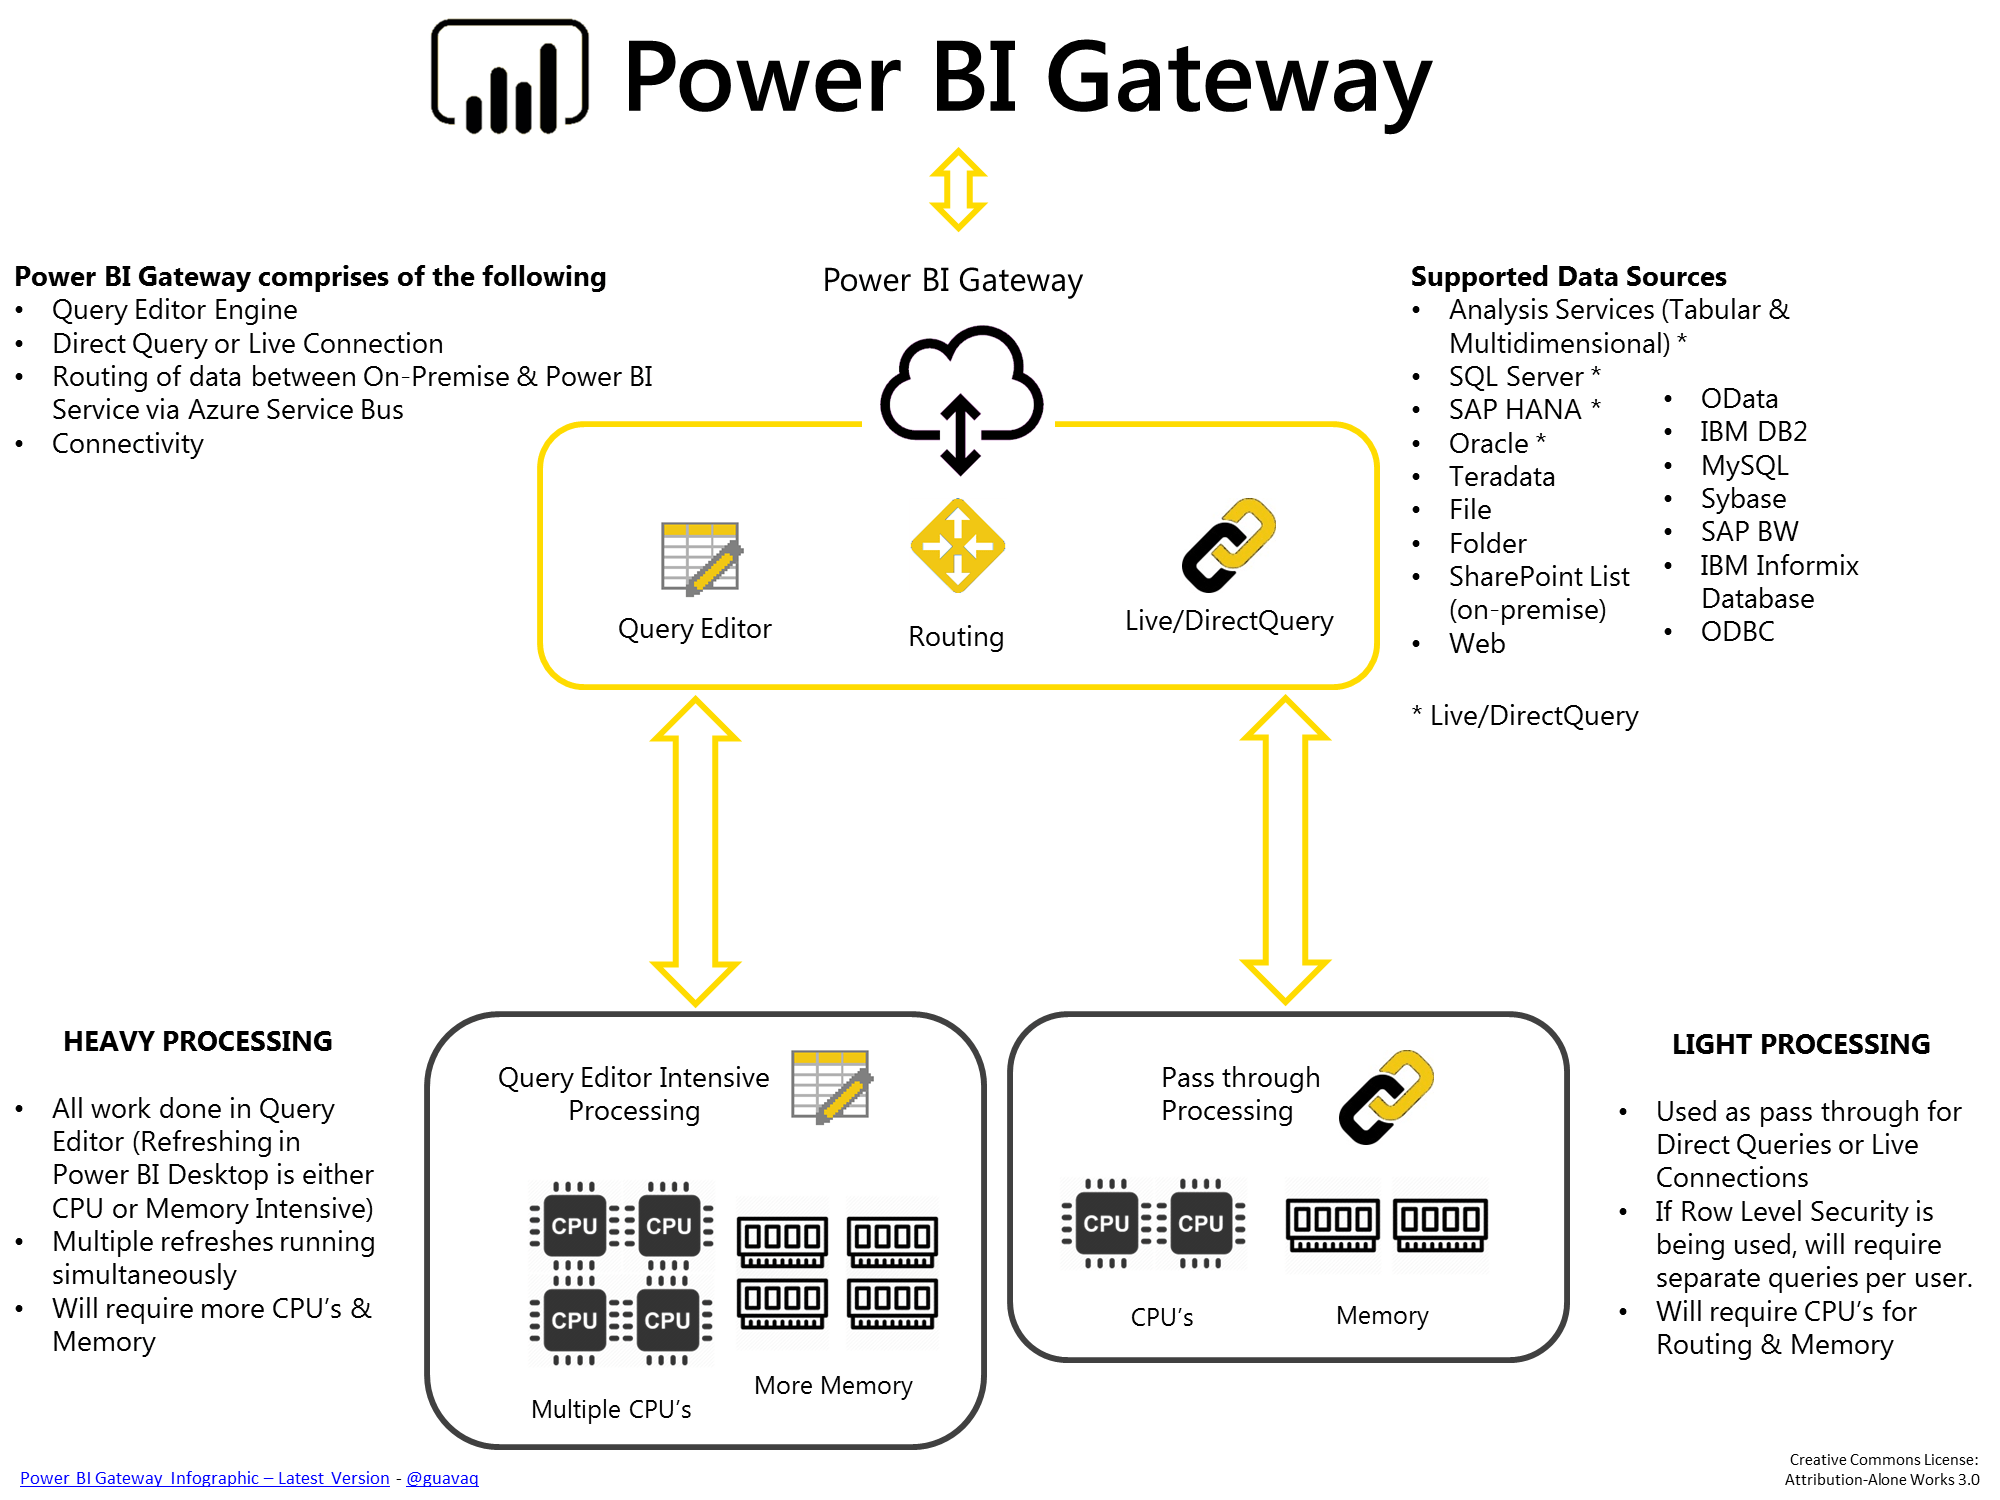 How to power bi